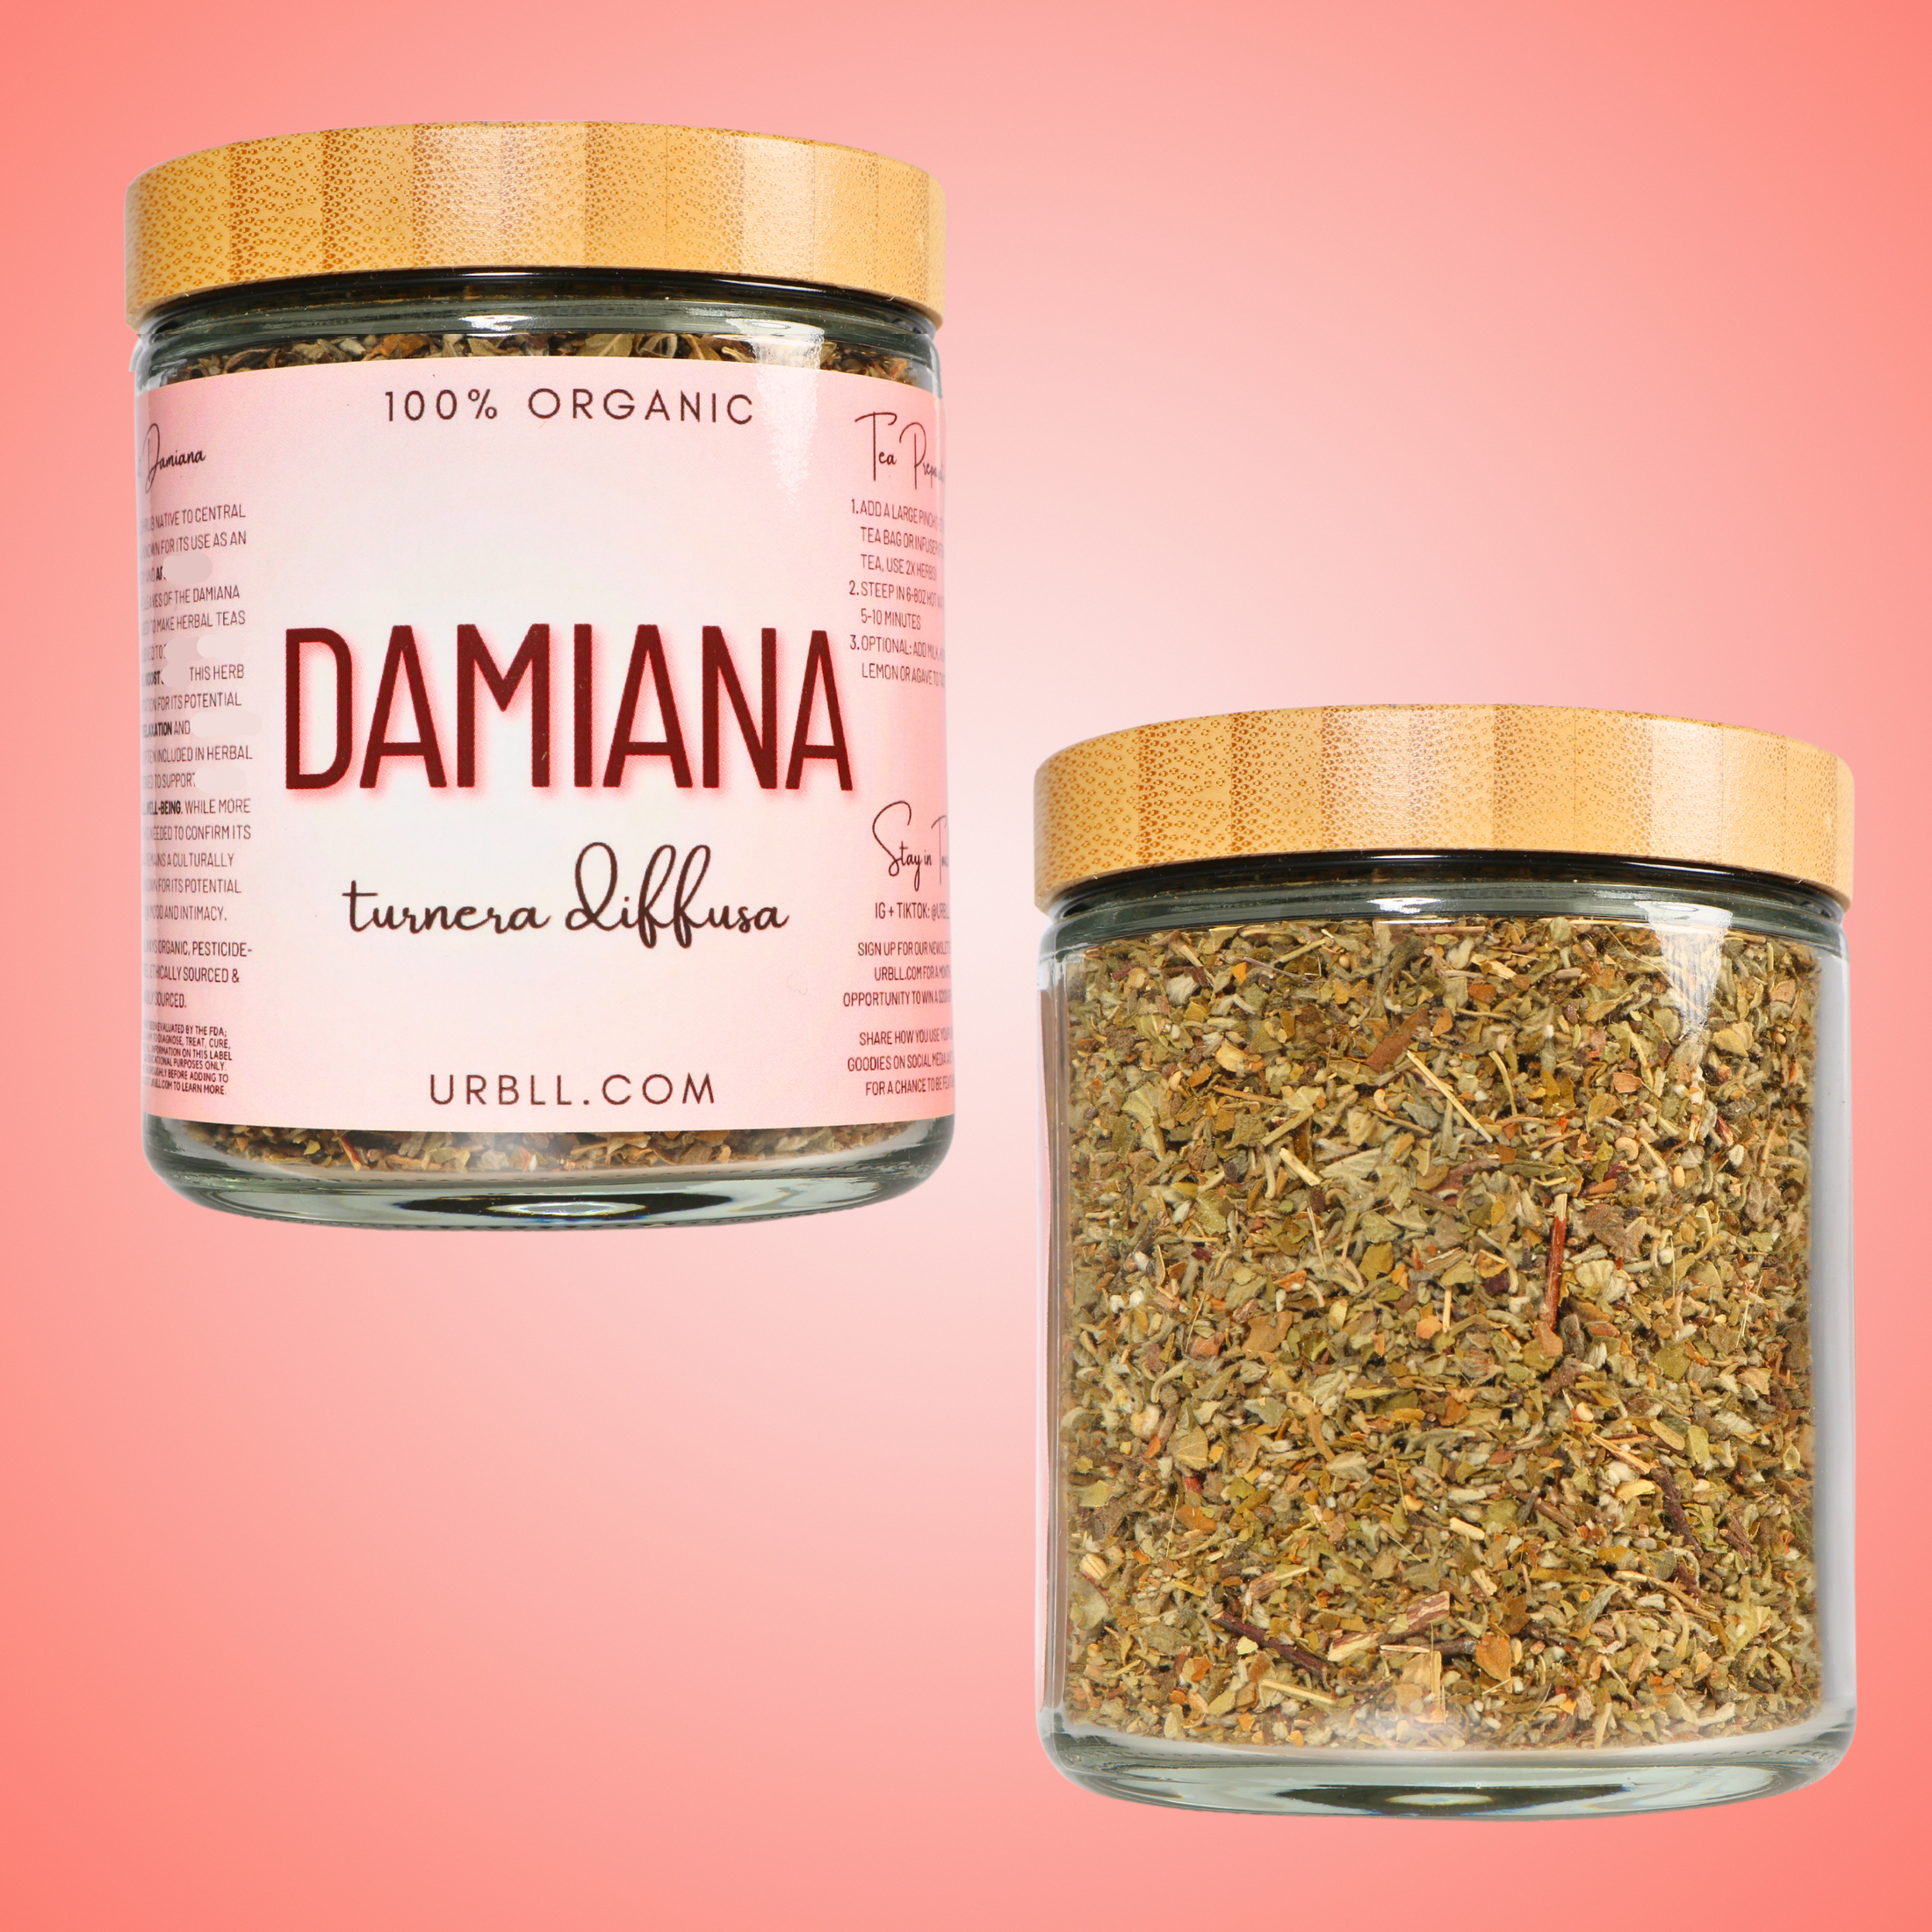 Damiana - Organic